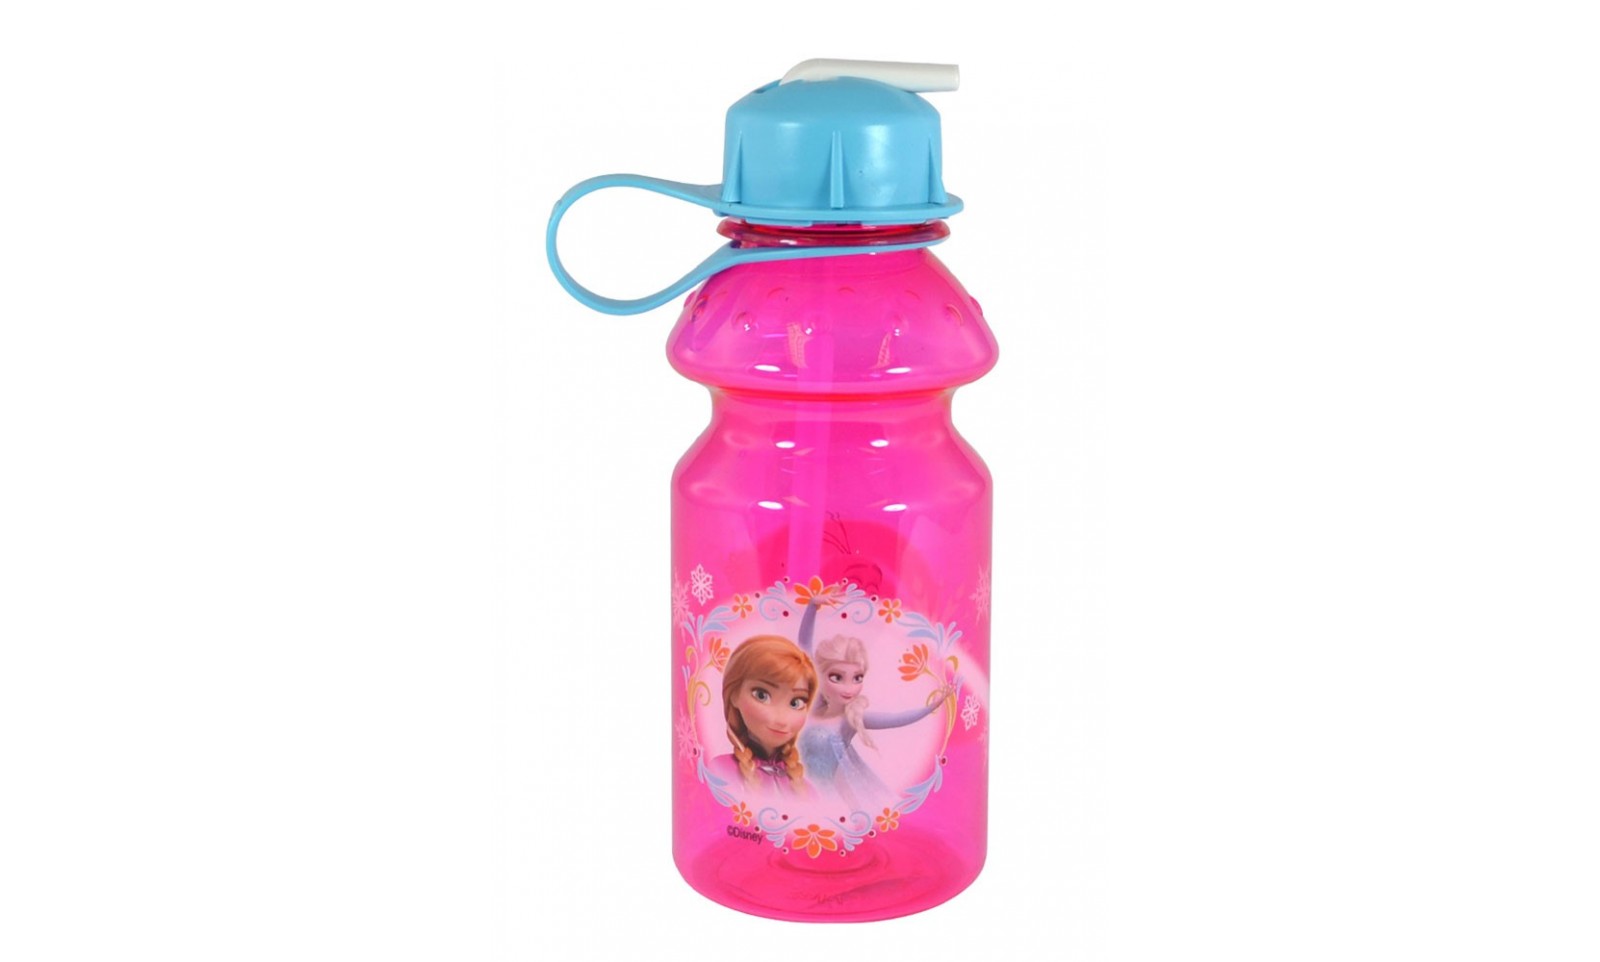 Disney Store Disney Princess Water Bottle